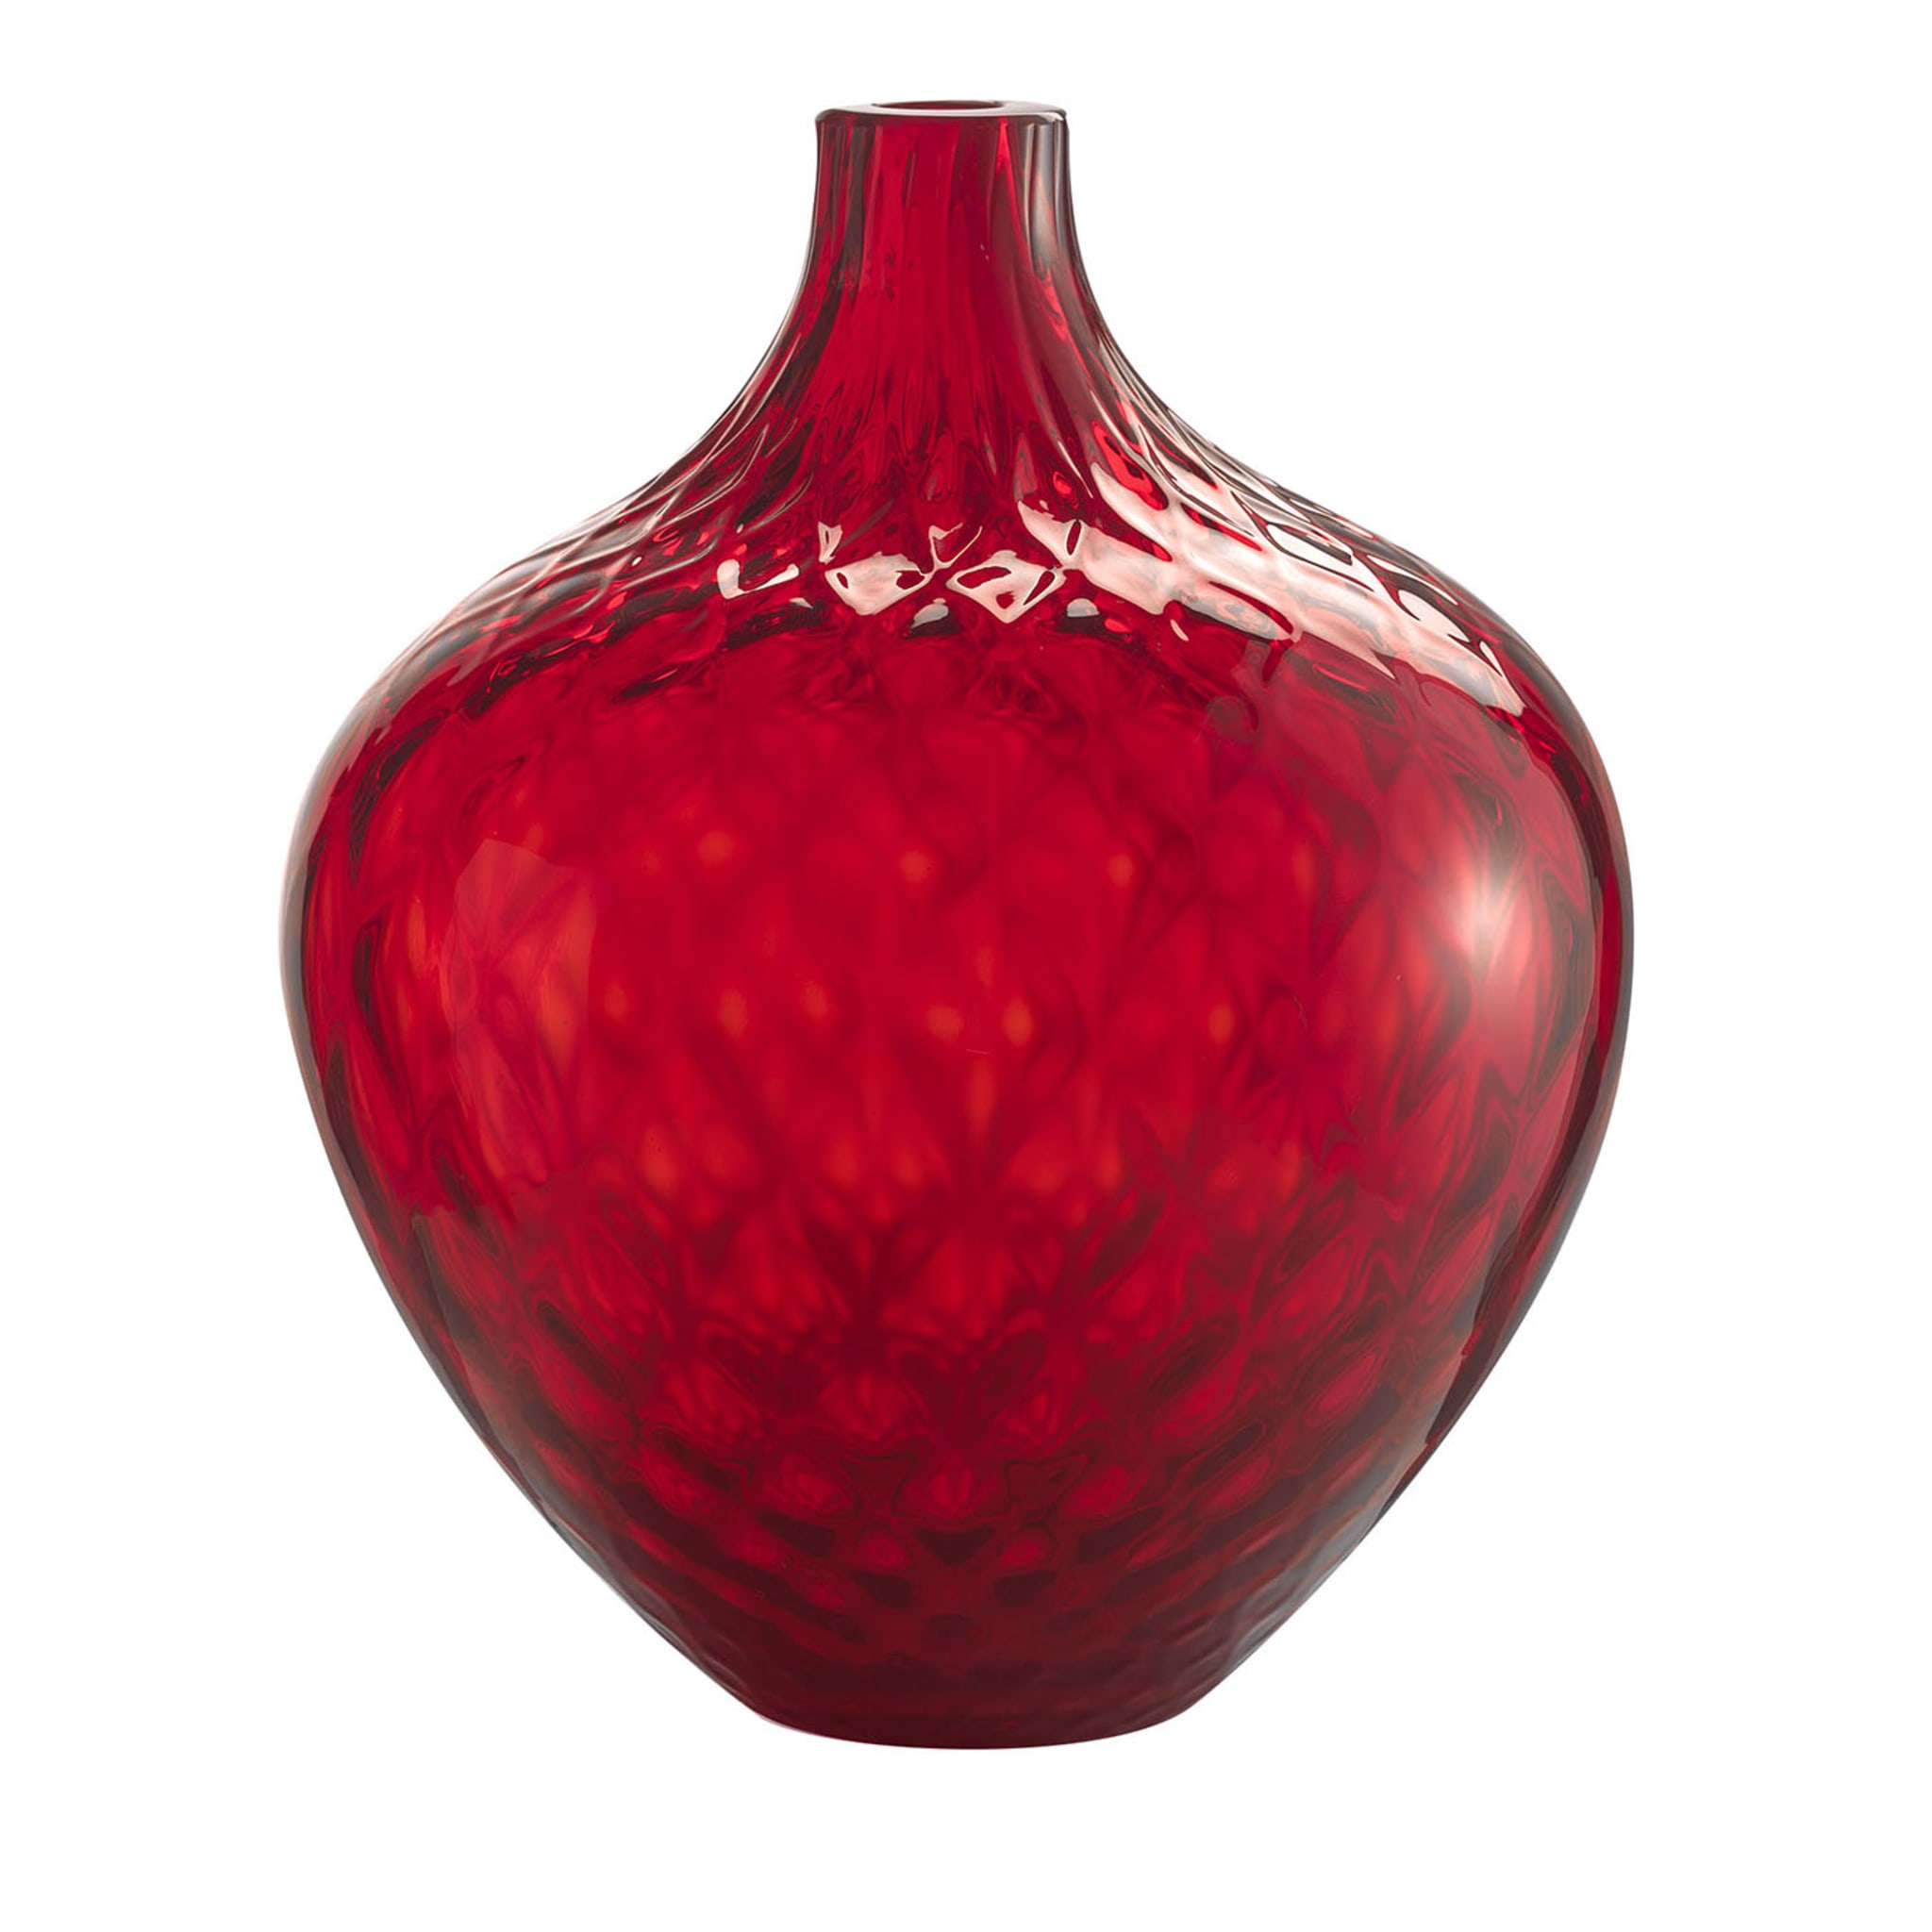 Samarcanda Medium Ballaton Rote Vase - Hauptansicht